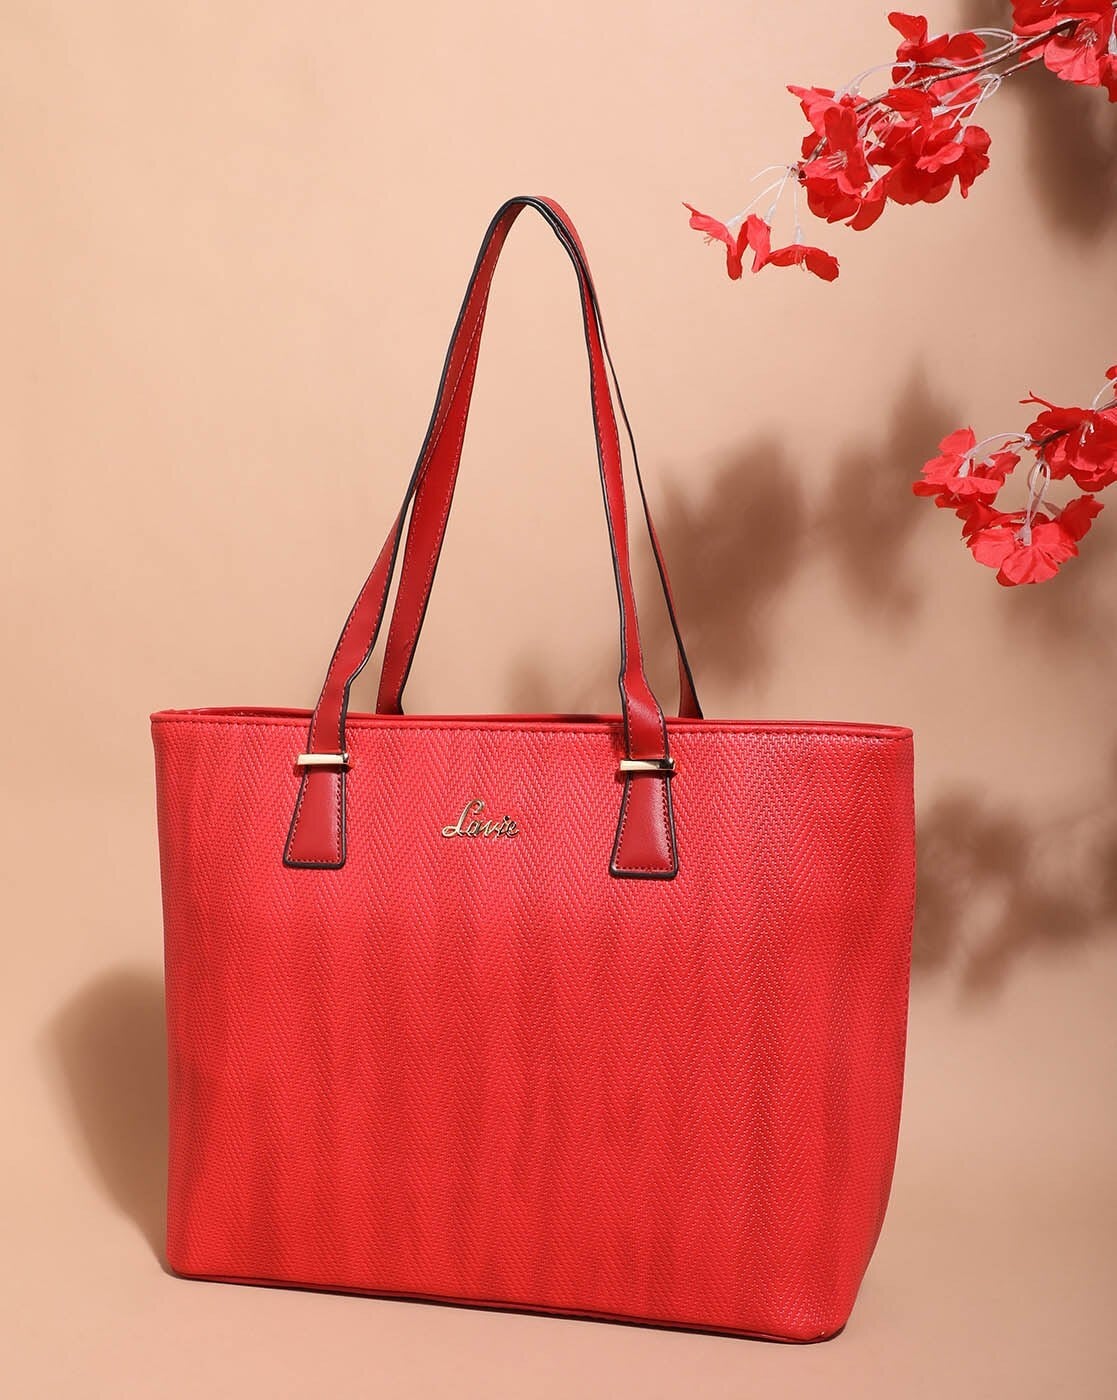 Telfar Shopping Bag Small Red | Bags, Girly bags, Small bags